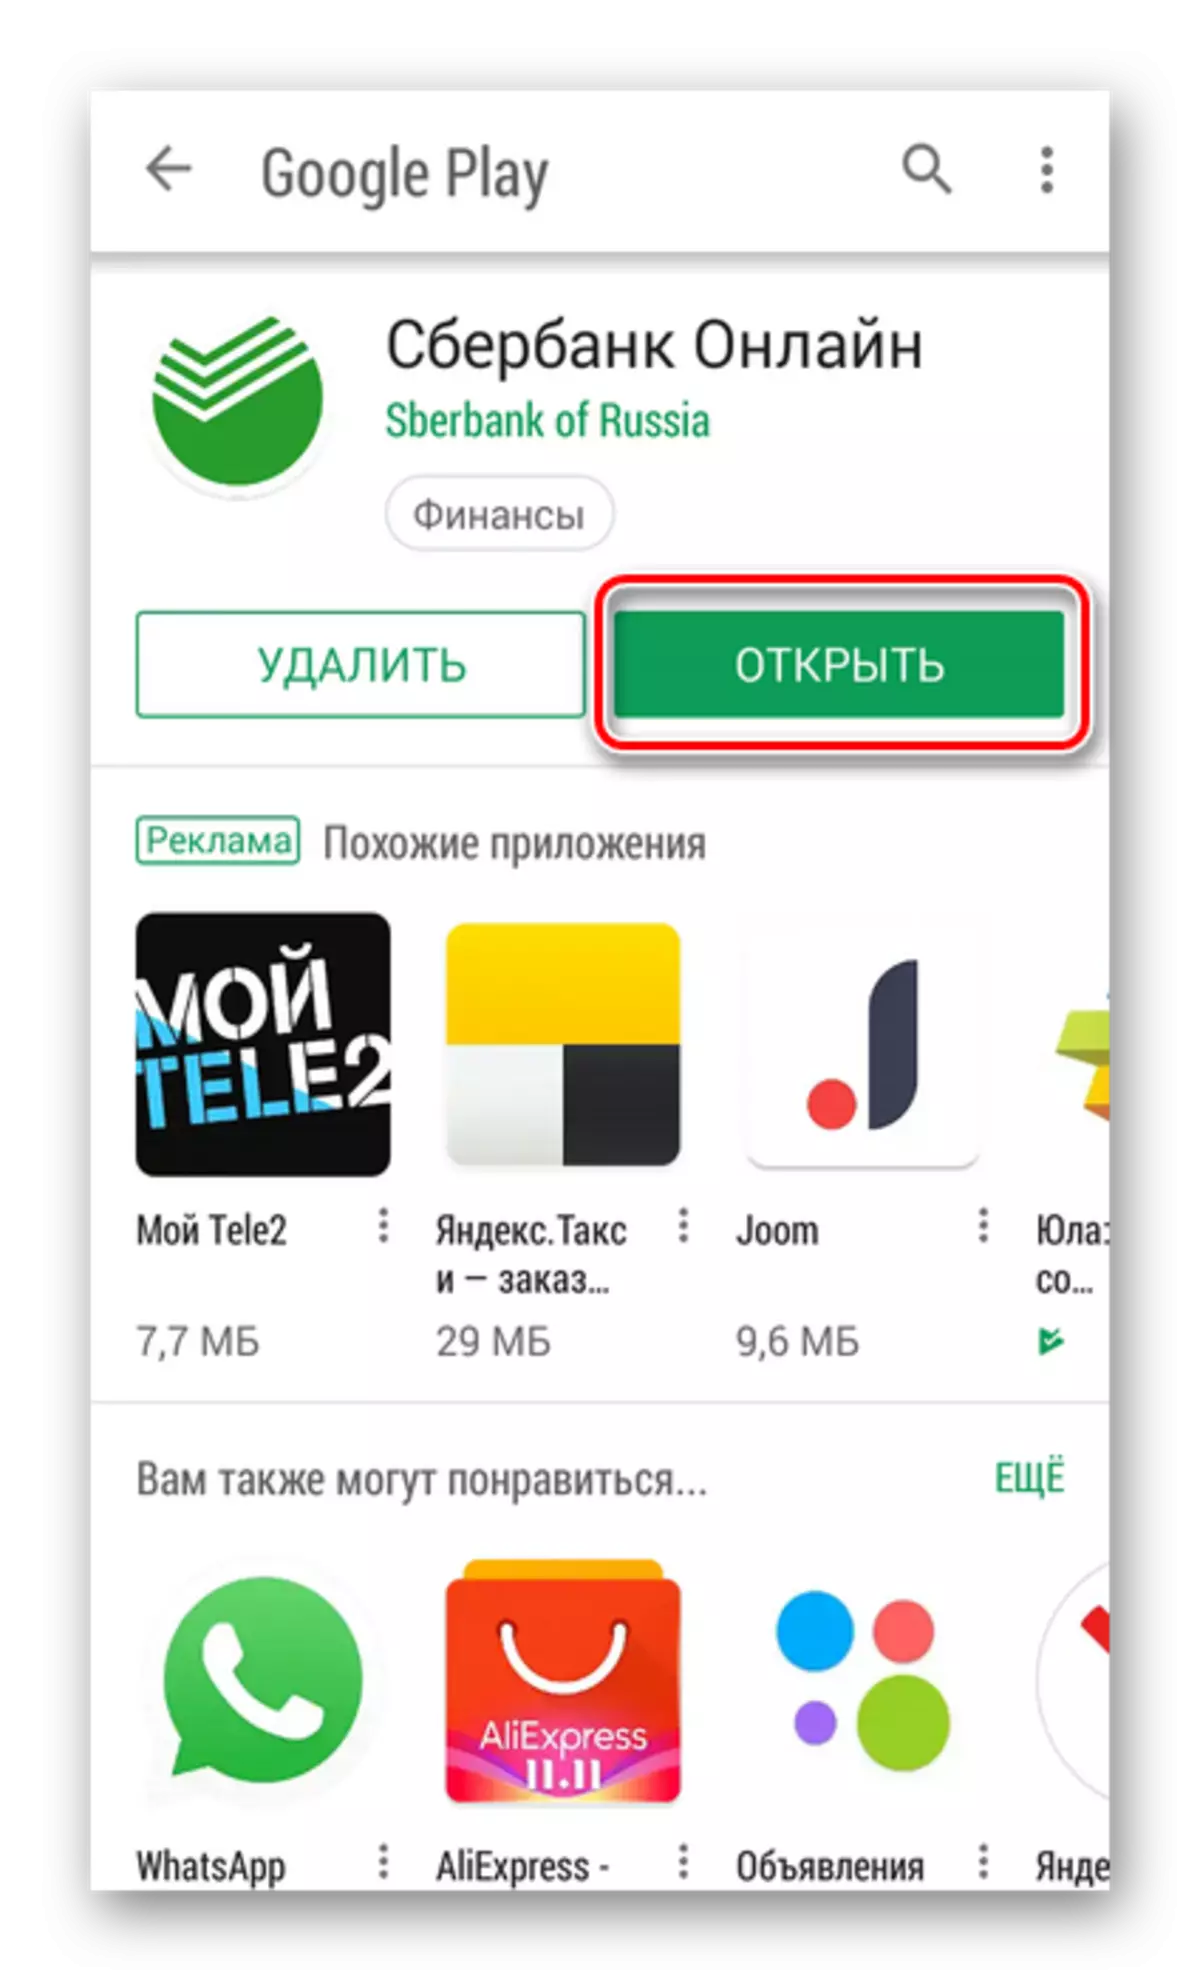 Buksi ang aplikasyon sa Sberbank online